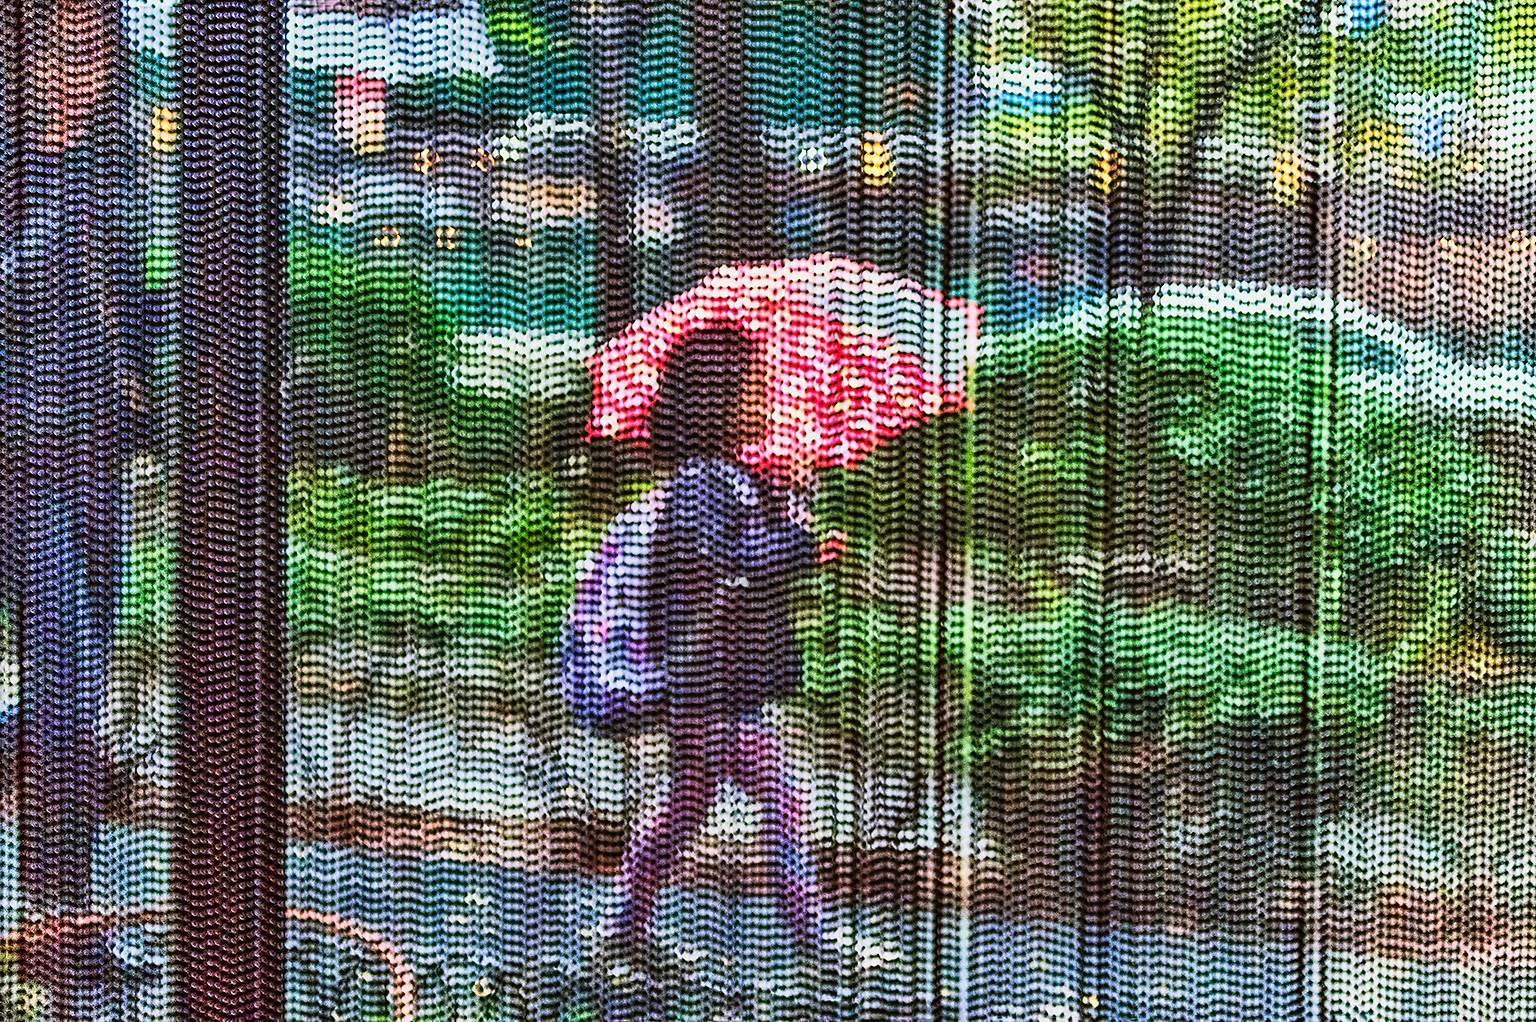 Figure in the rain